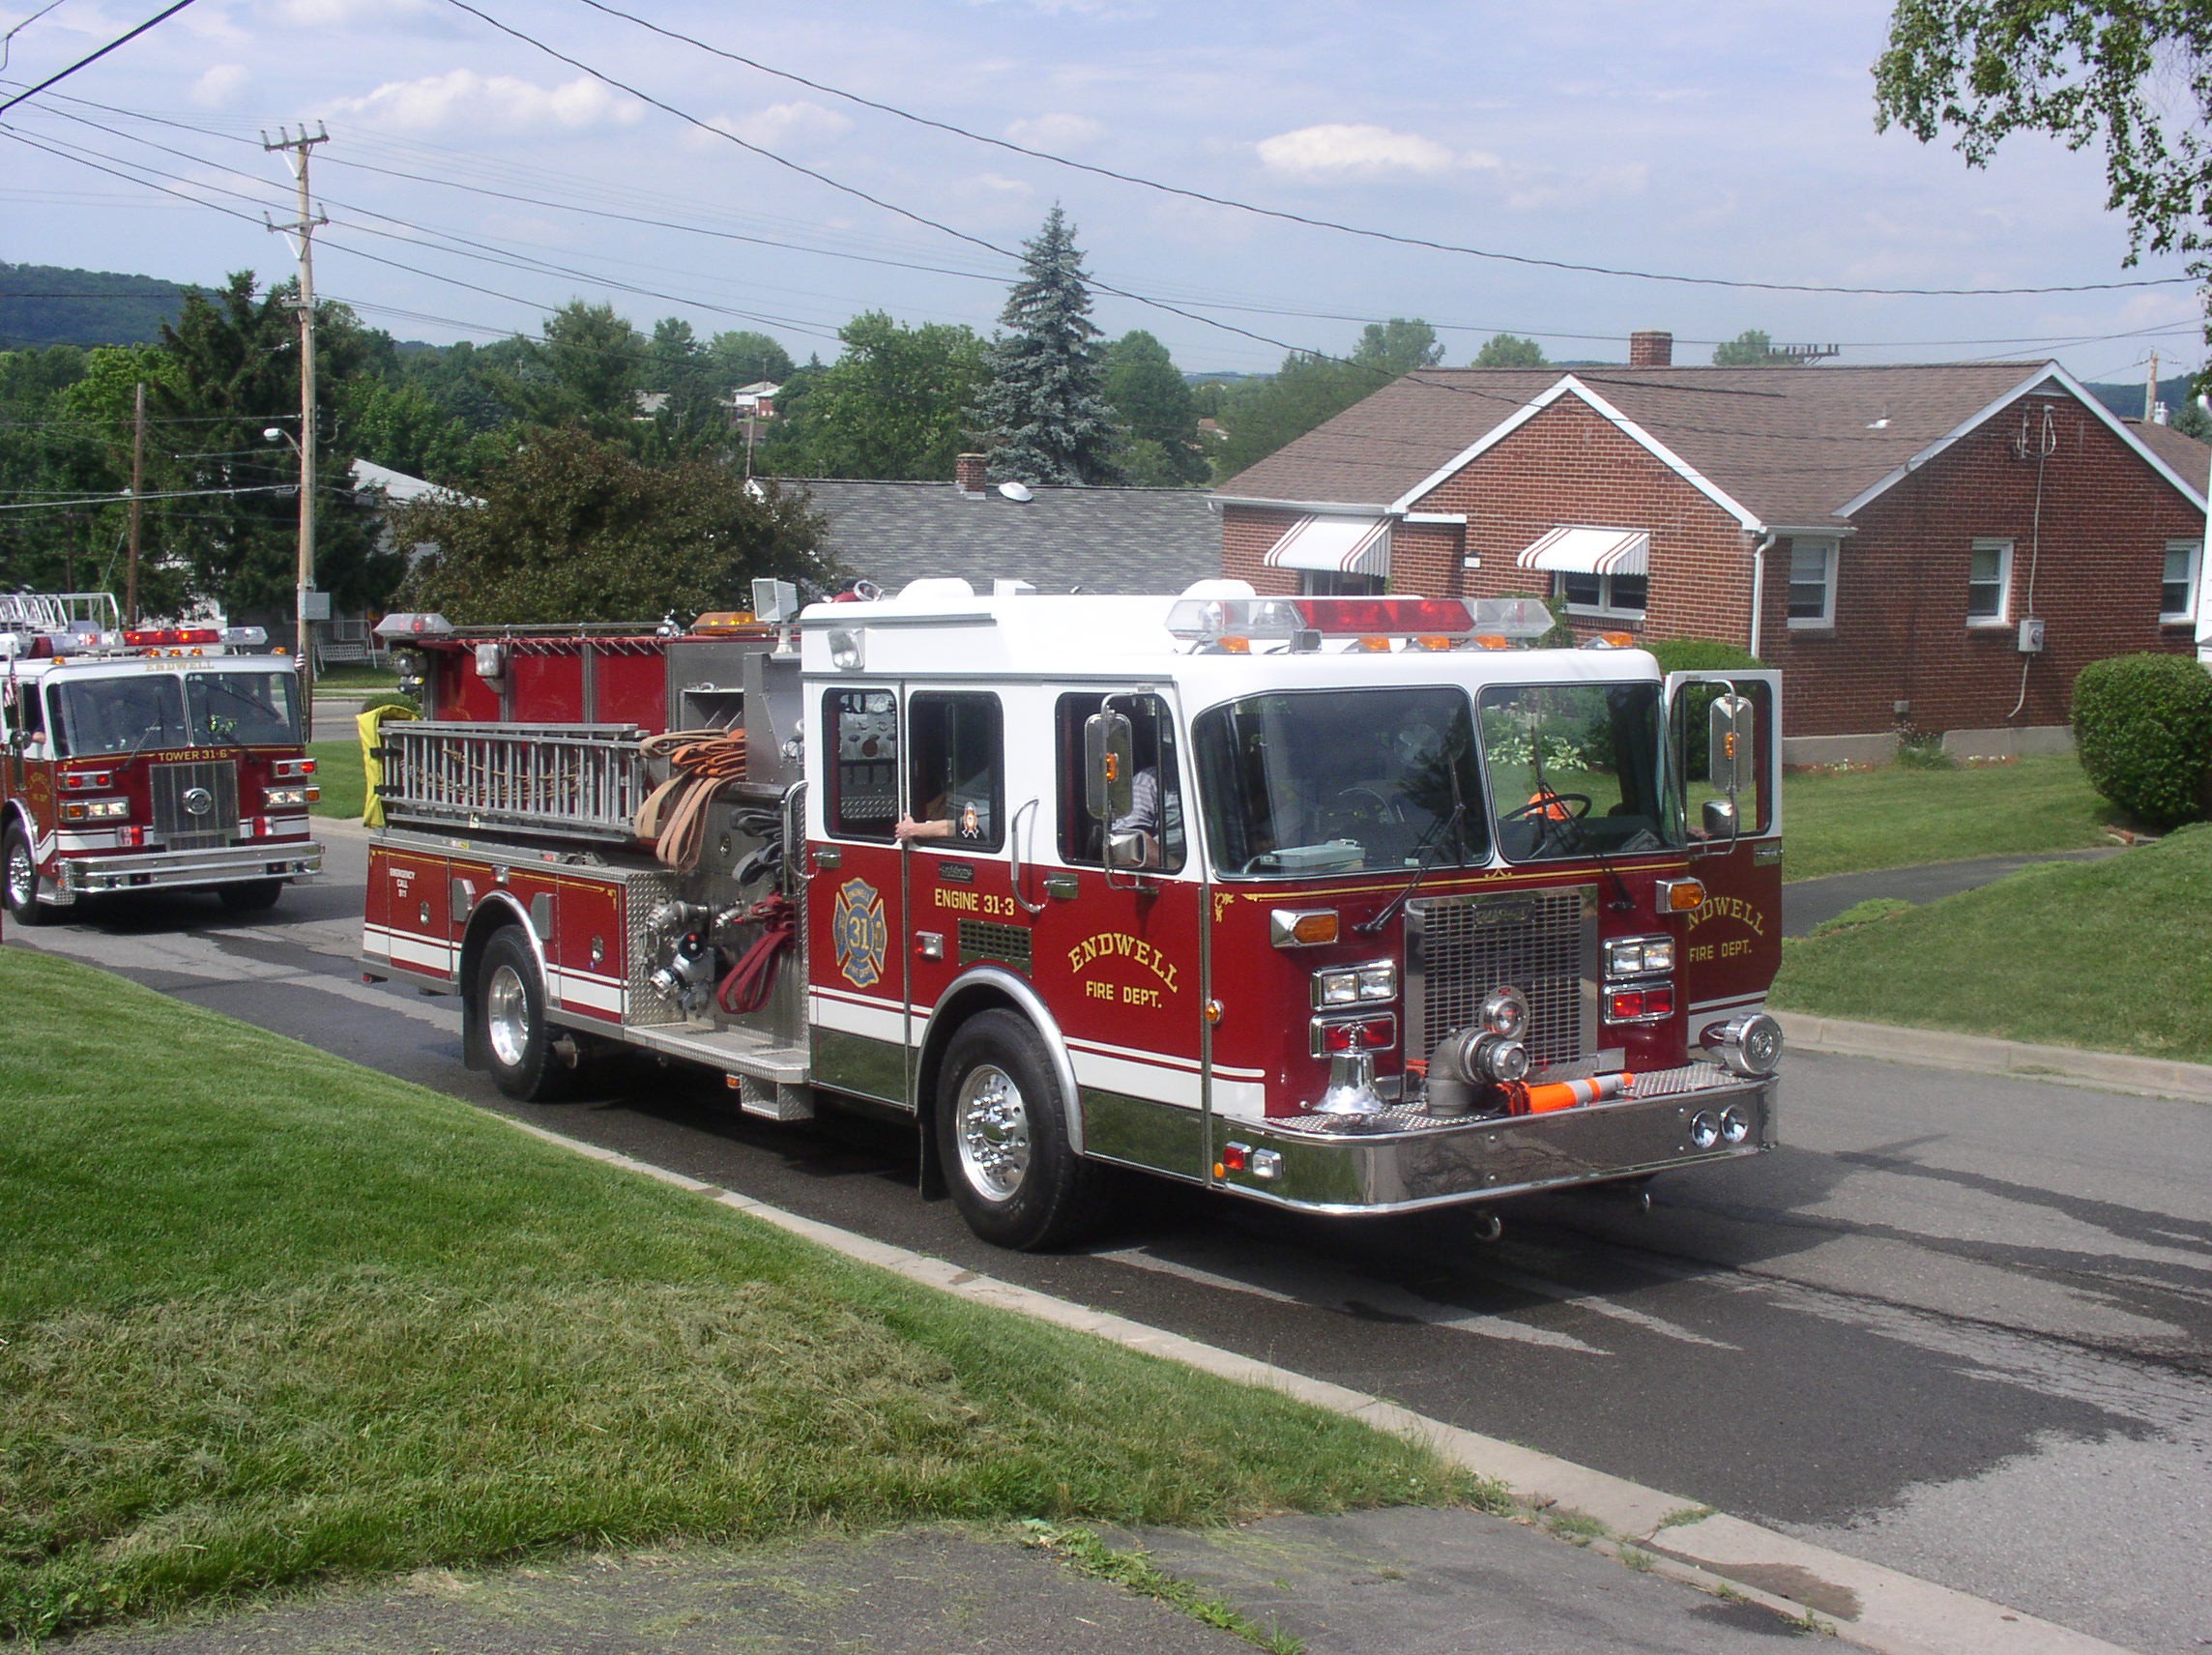 06-16-04  Response - Fire - 325 Taylor